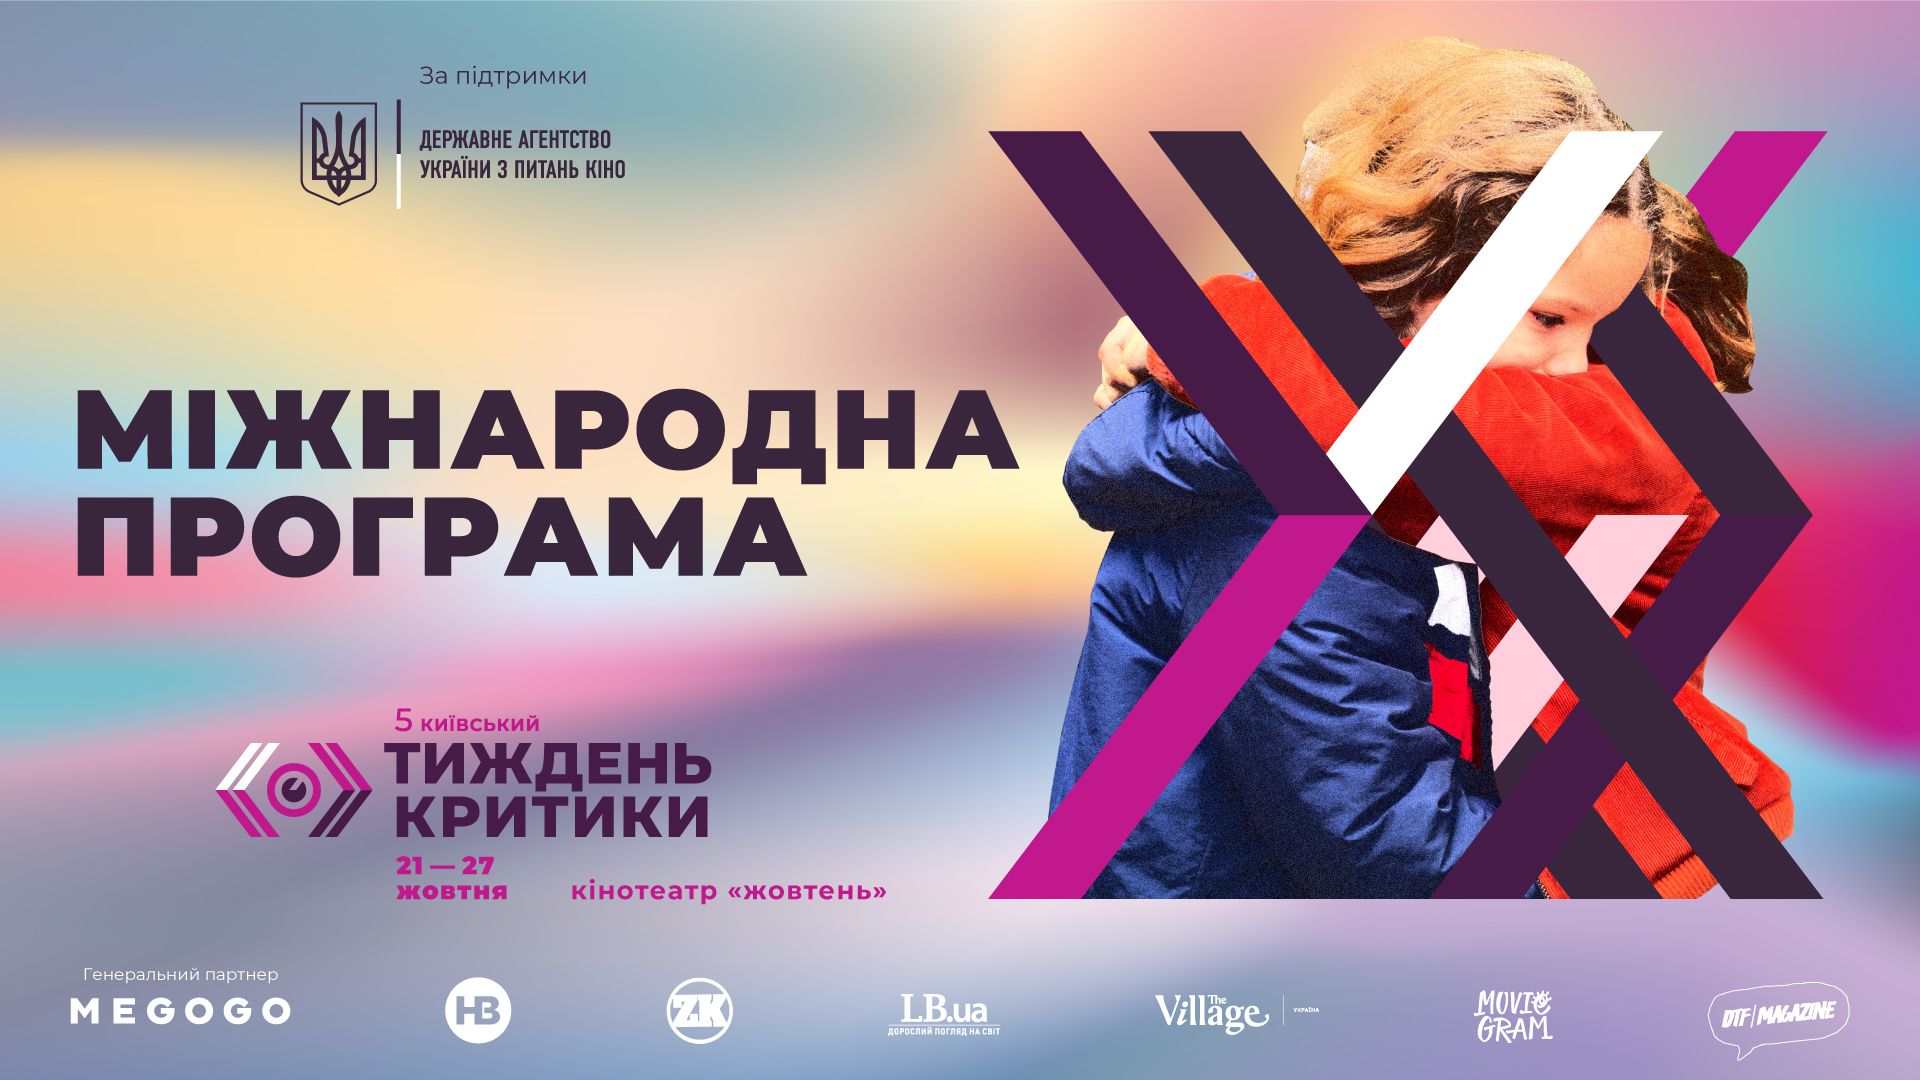 5-й кінофестиваль «Київський тиждень критики» оголосив міжнародну програму